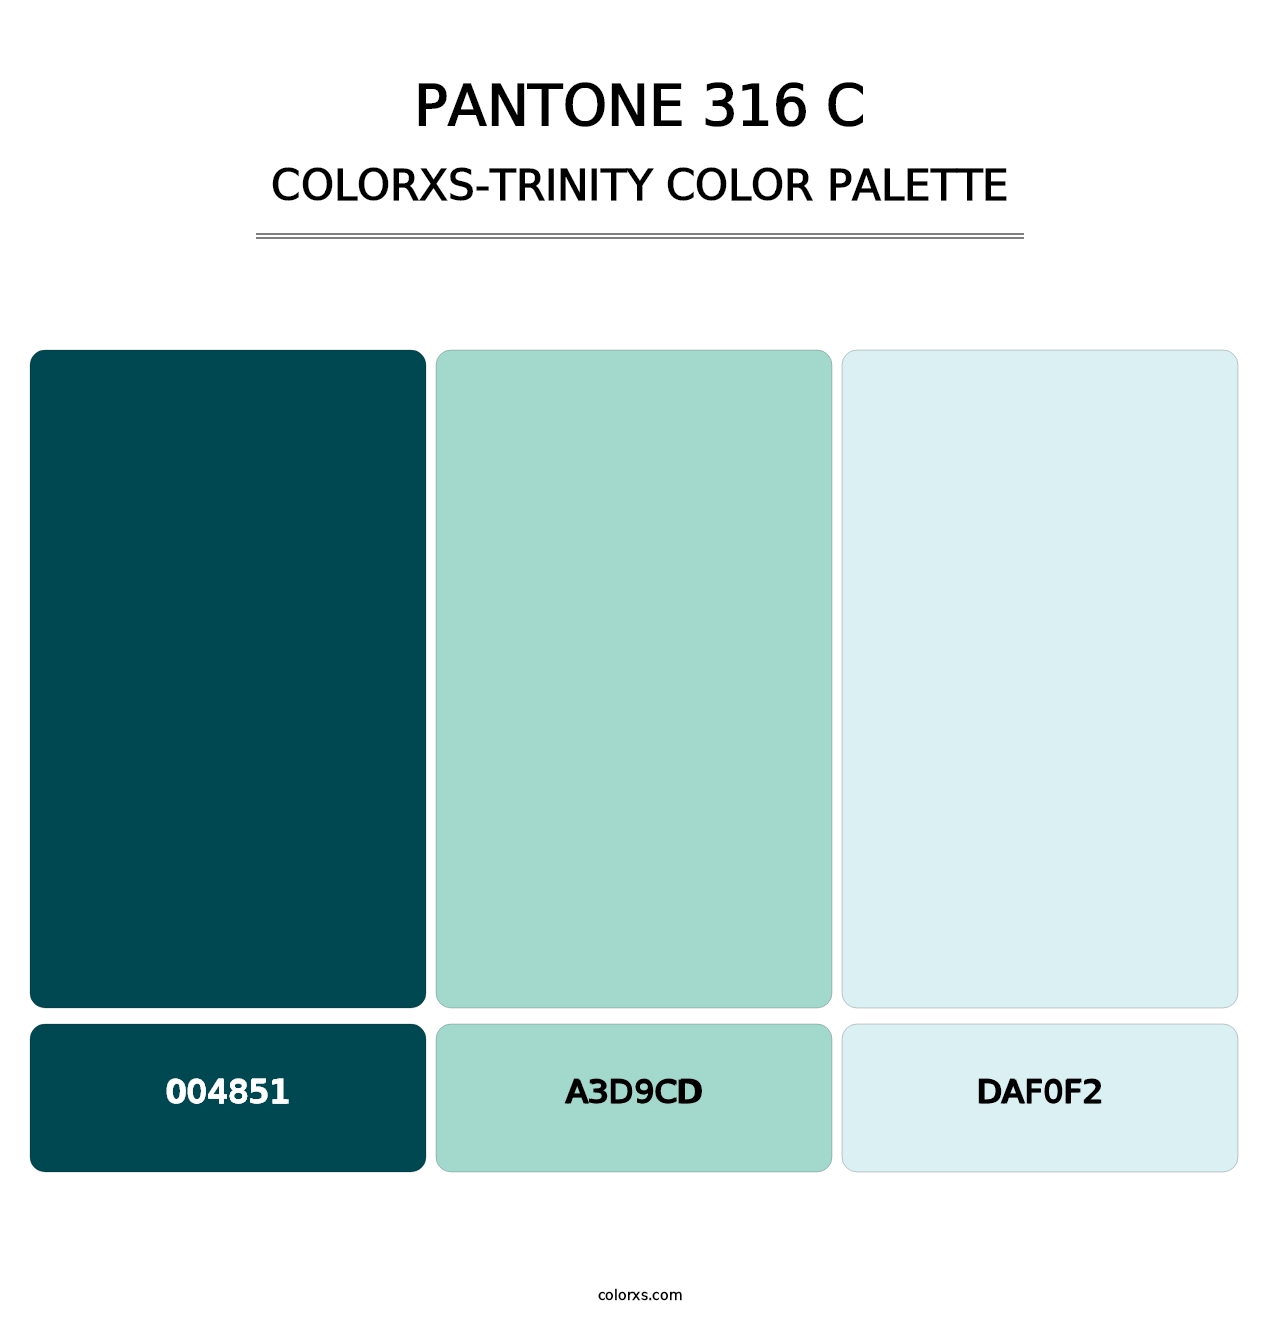 PANTONE 316 C - Colorxs Trinity Palette